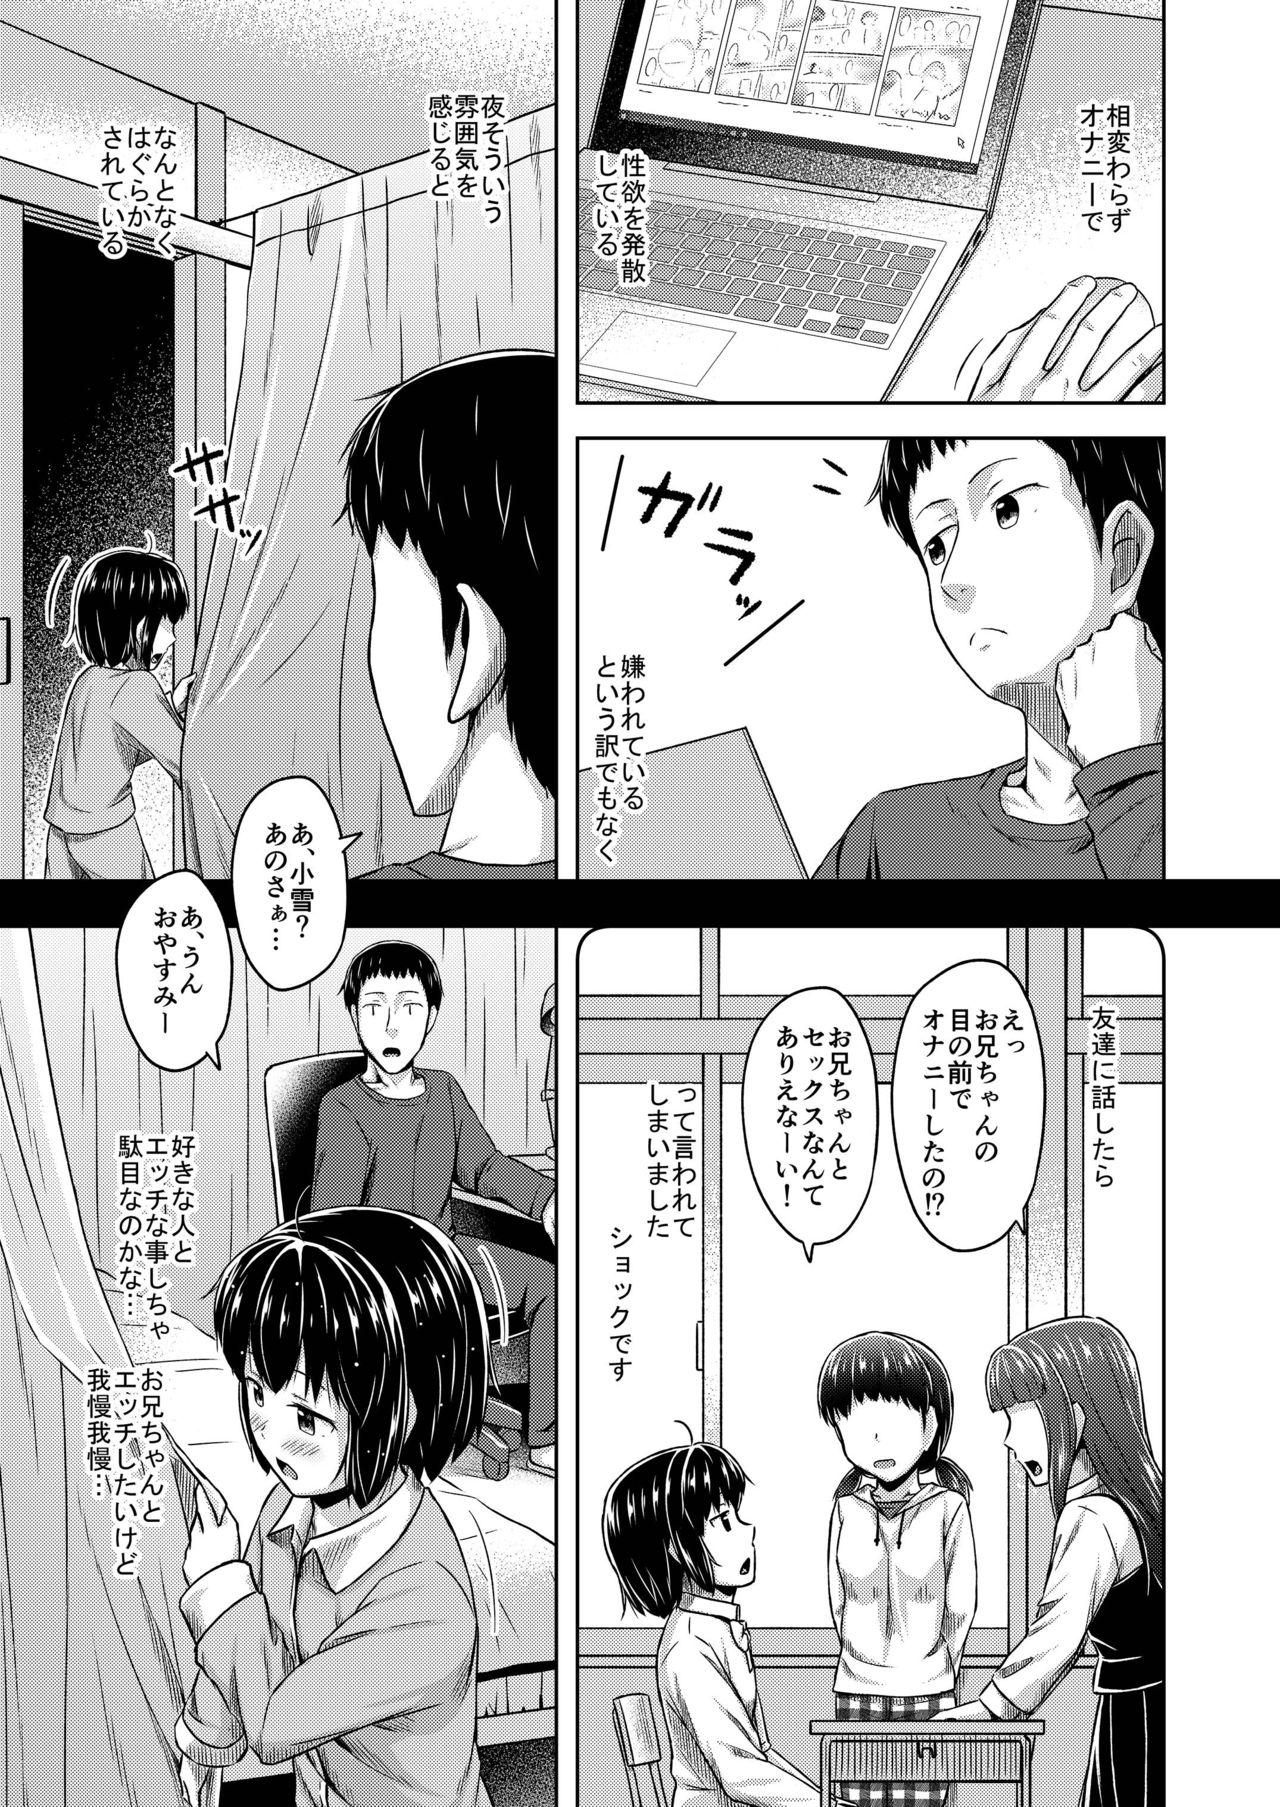 Shot 妹と俺のオナニー事情2 - Original Public - Page 5